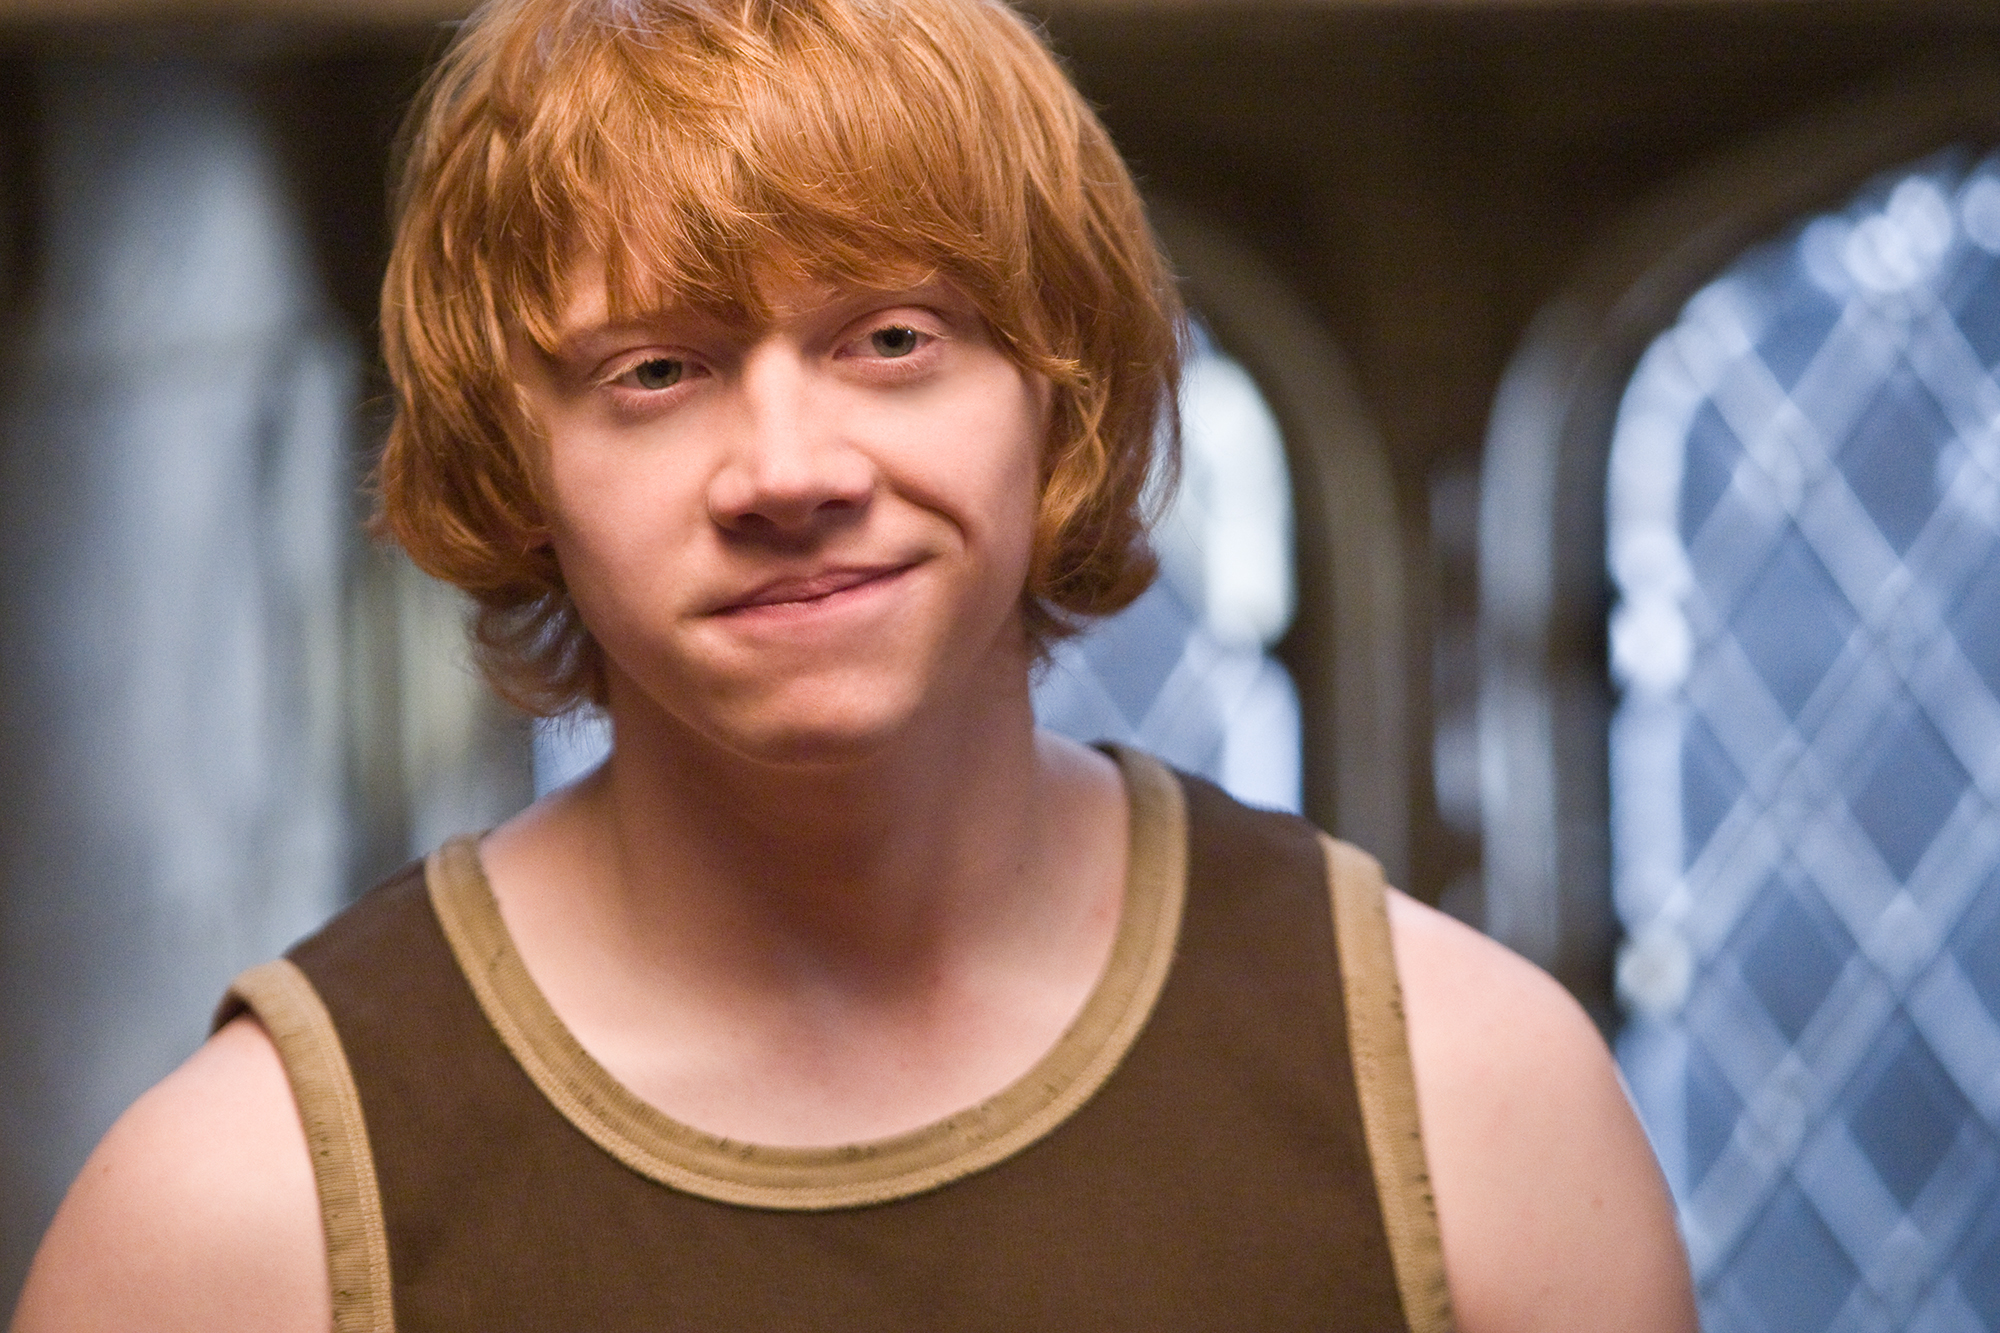 Ron Weasley: The Loyal Friend in Harry Potter 2